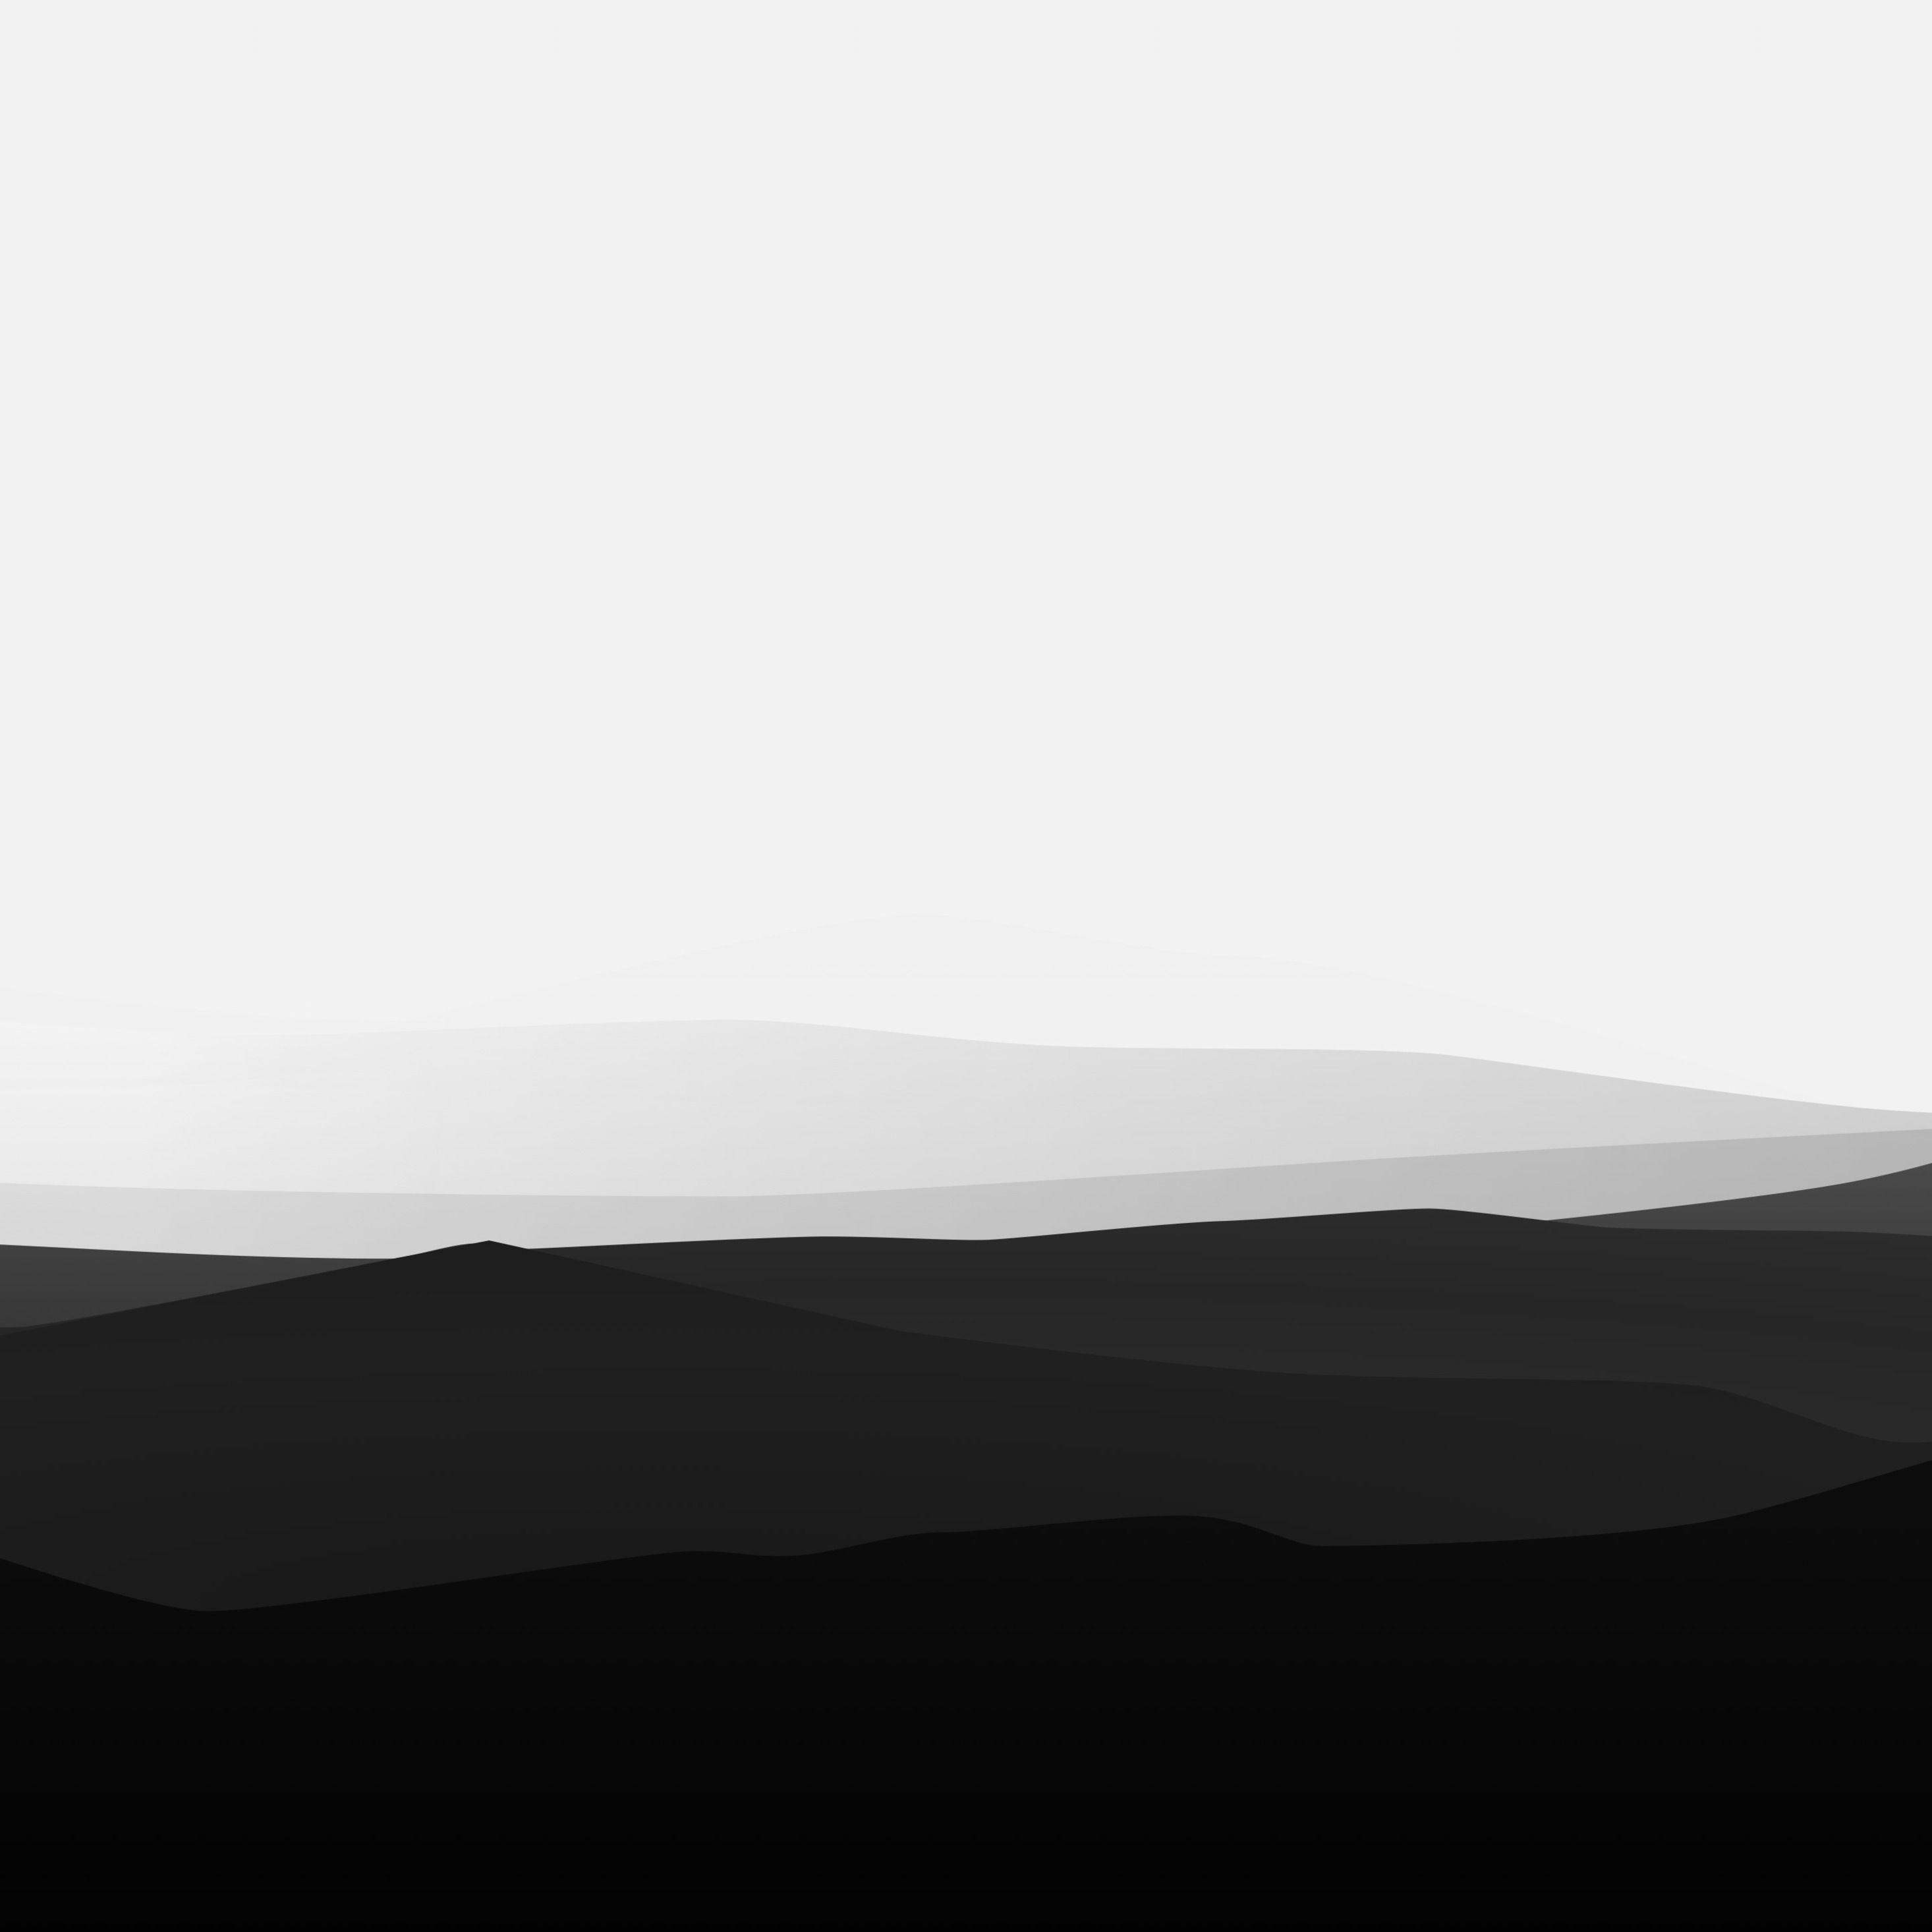 fond d'écran minimaliste ipad,noir,blanc,ciel,horizon,colline